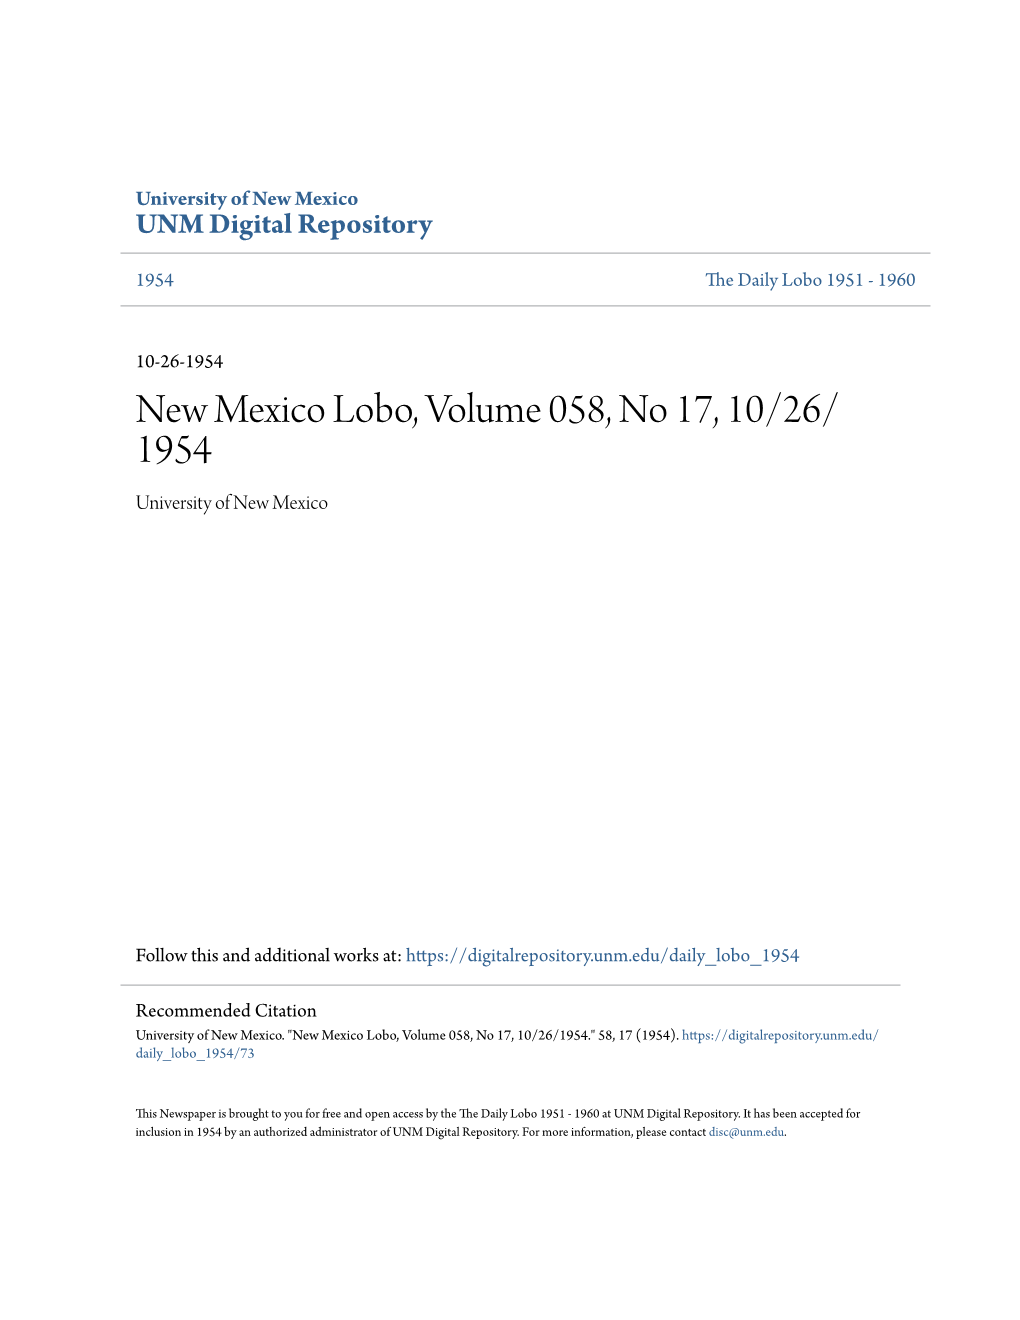 New Mexico Lobo, Volume 058, No 17, 10/26/1954." 58, 17 (1954)